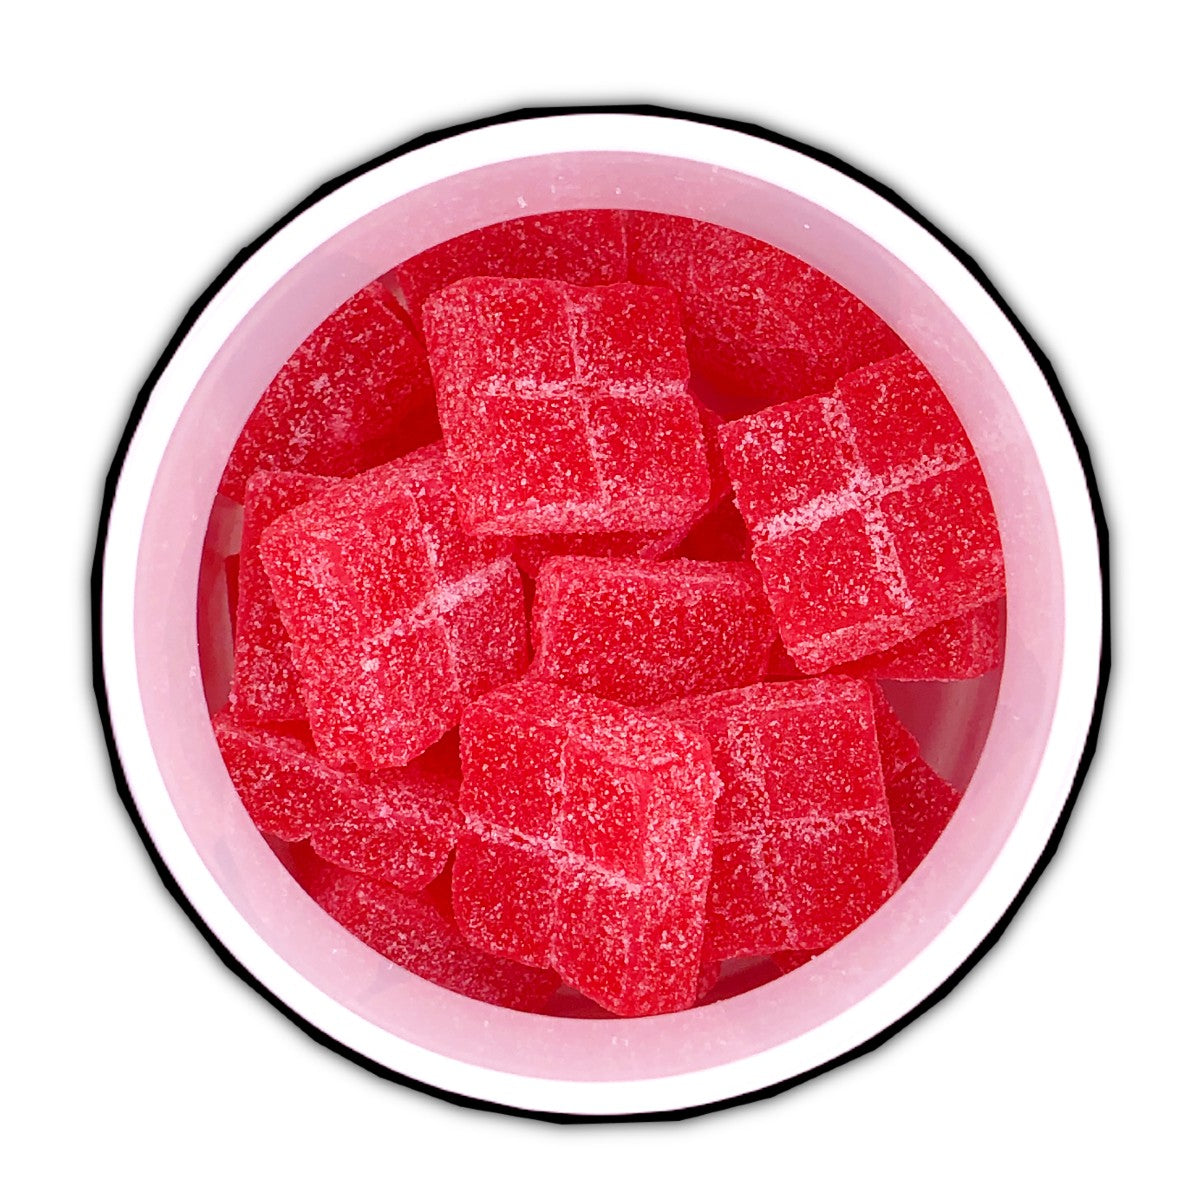 Fruit Punch Flavor Infused Gummies | Delta 9 Edibles